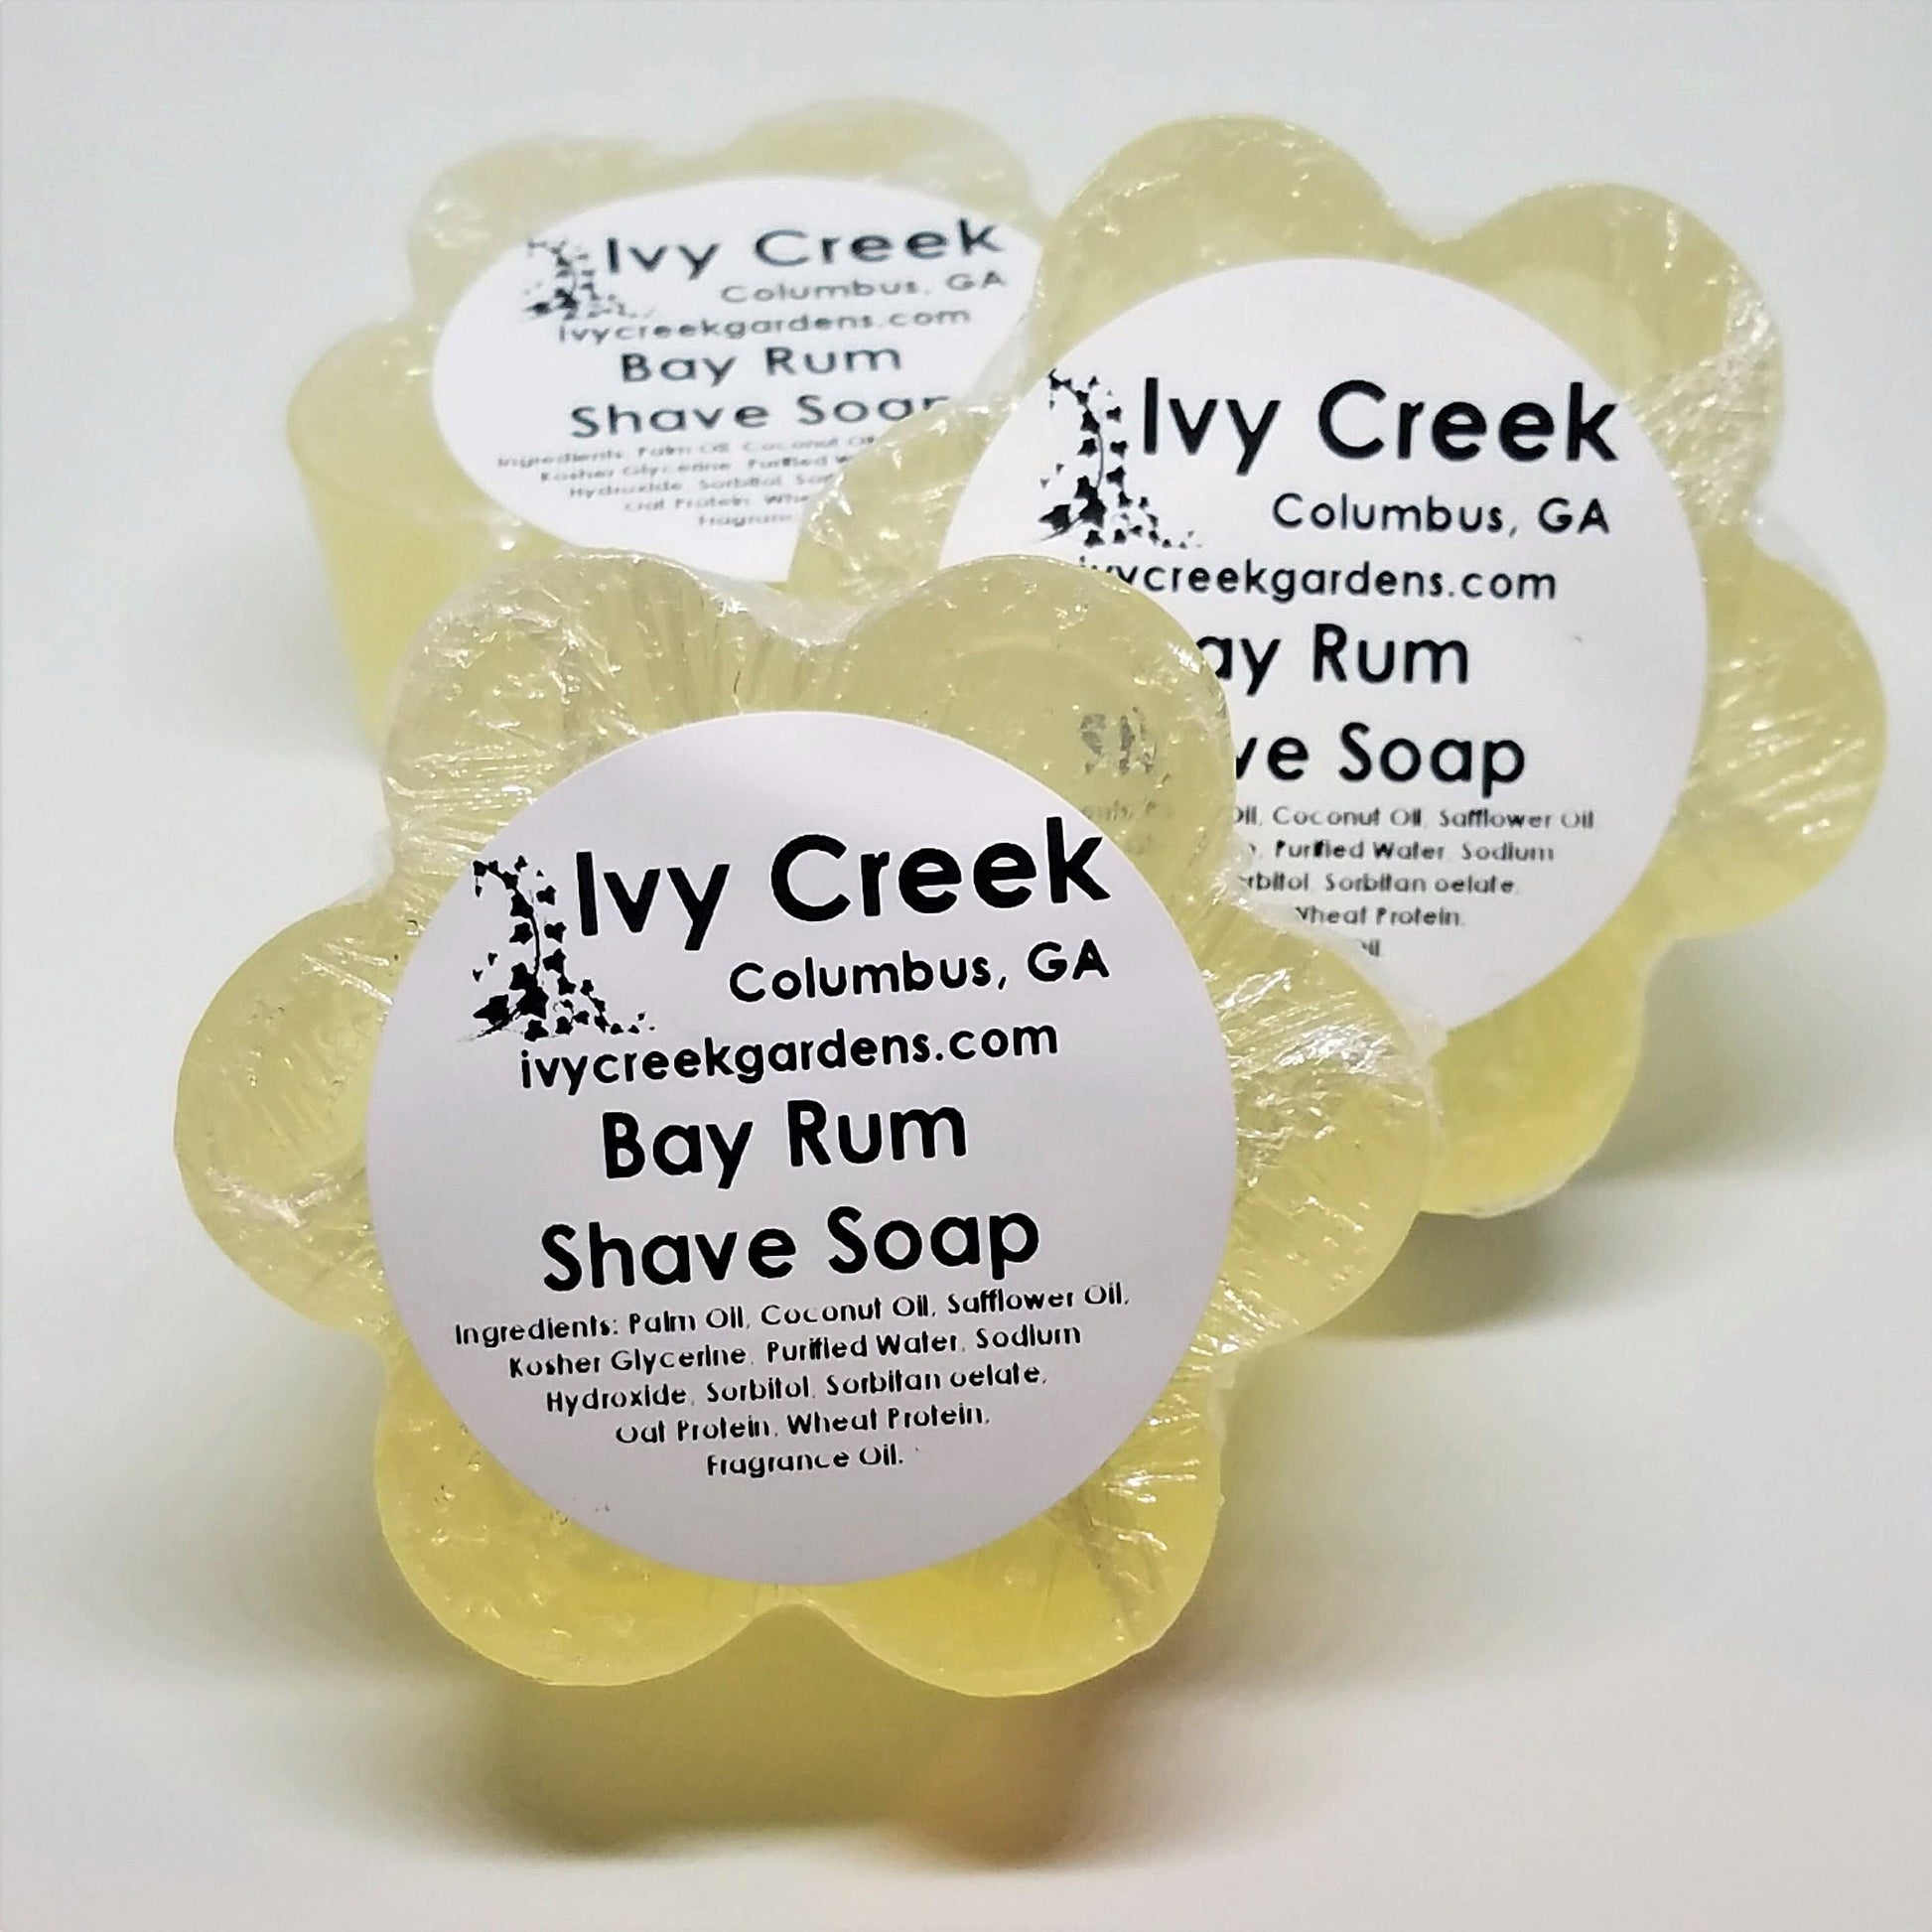 Ivy Creek Bay Rum Shave Soap - Glycerin-based, Intoxicating Masculine Scent, Prevents Razor Burn, 3.5 oz